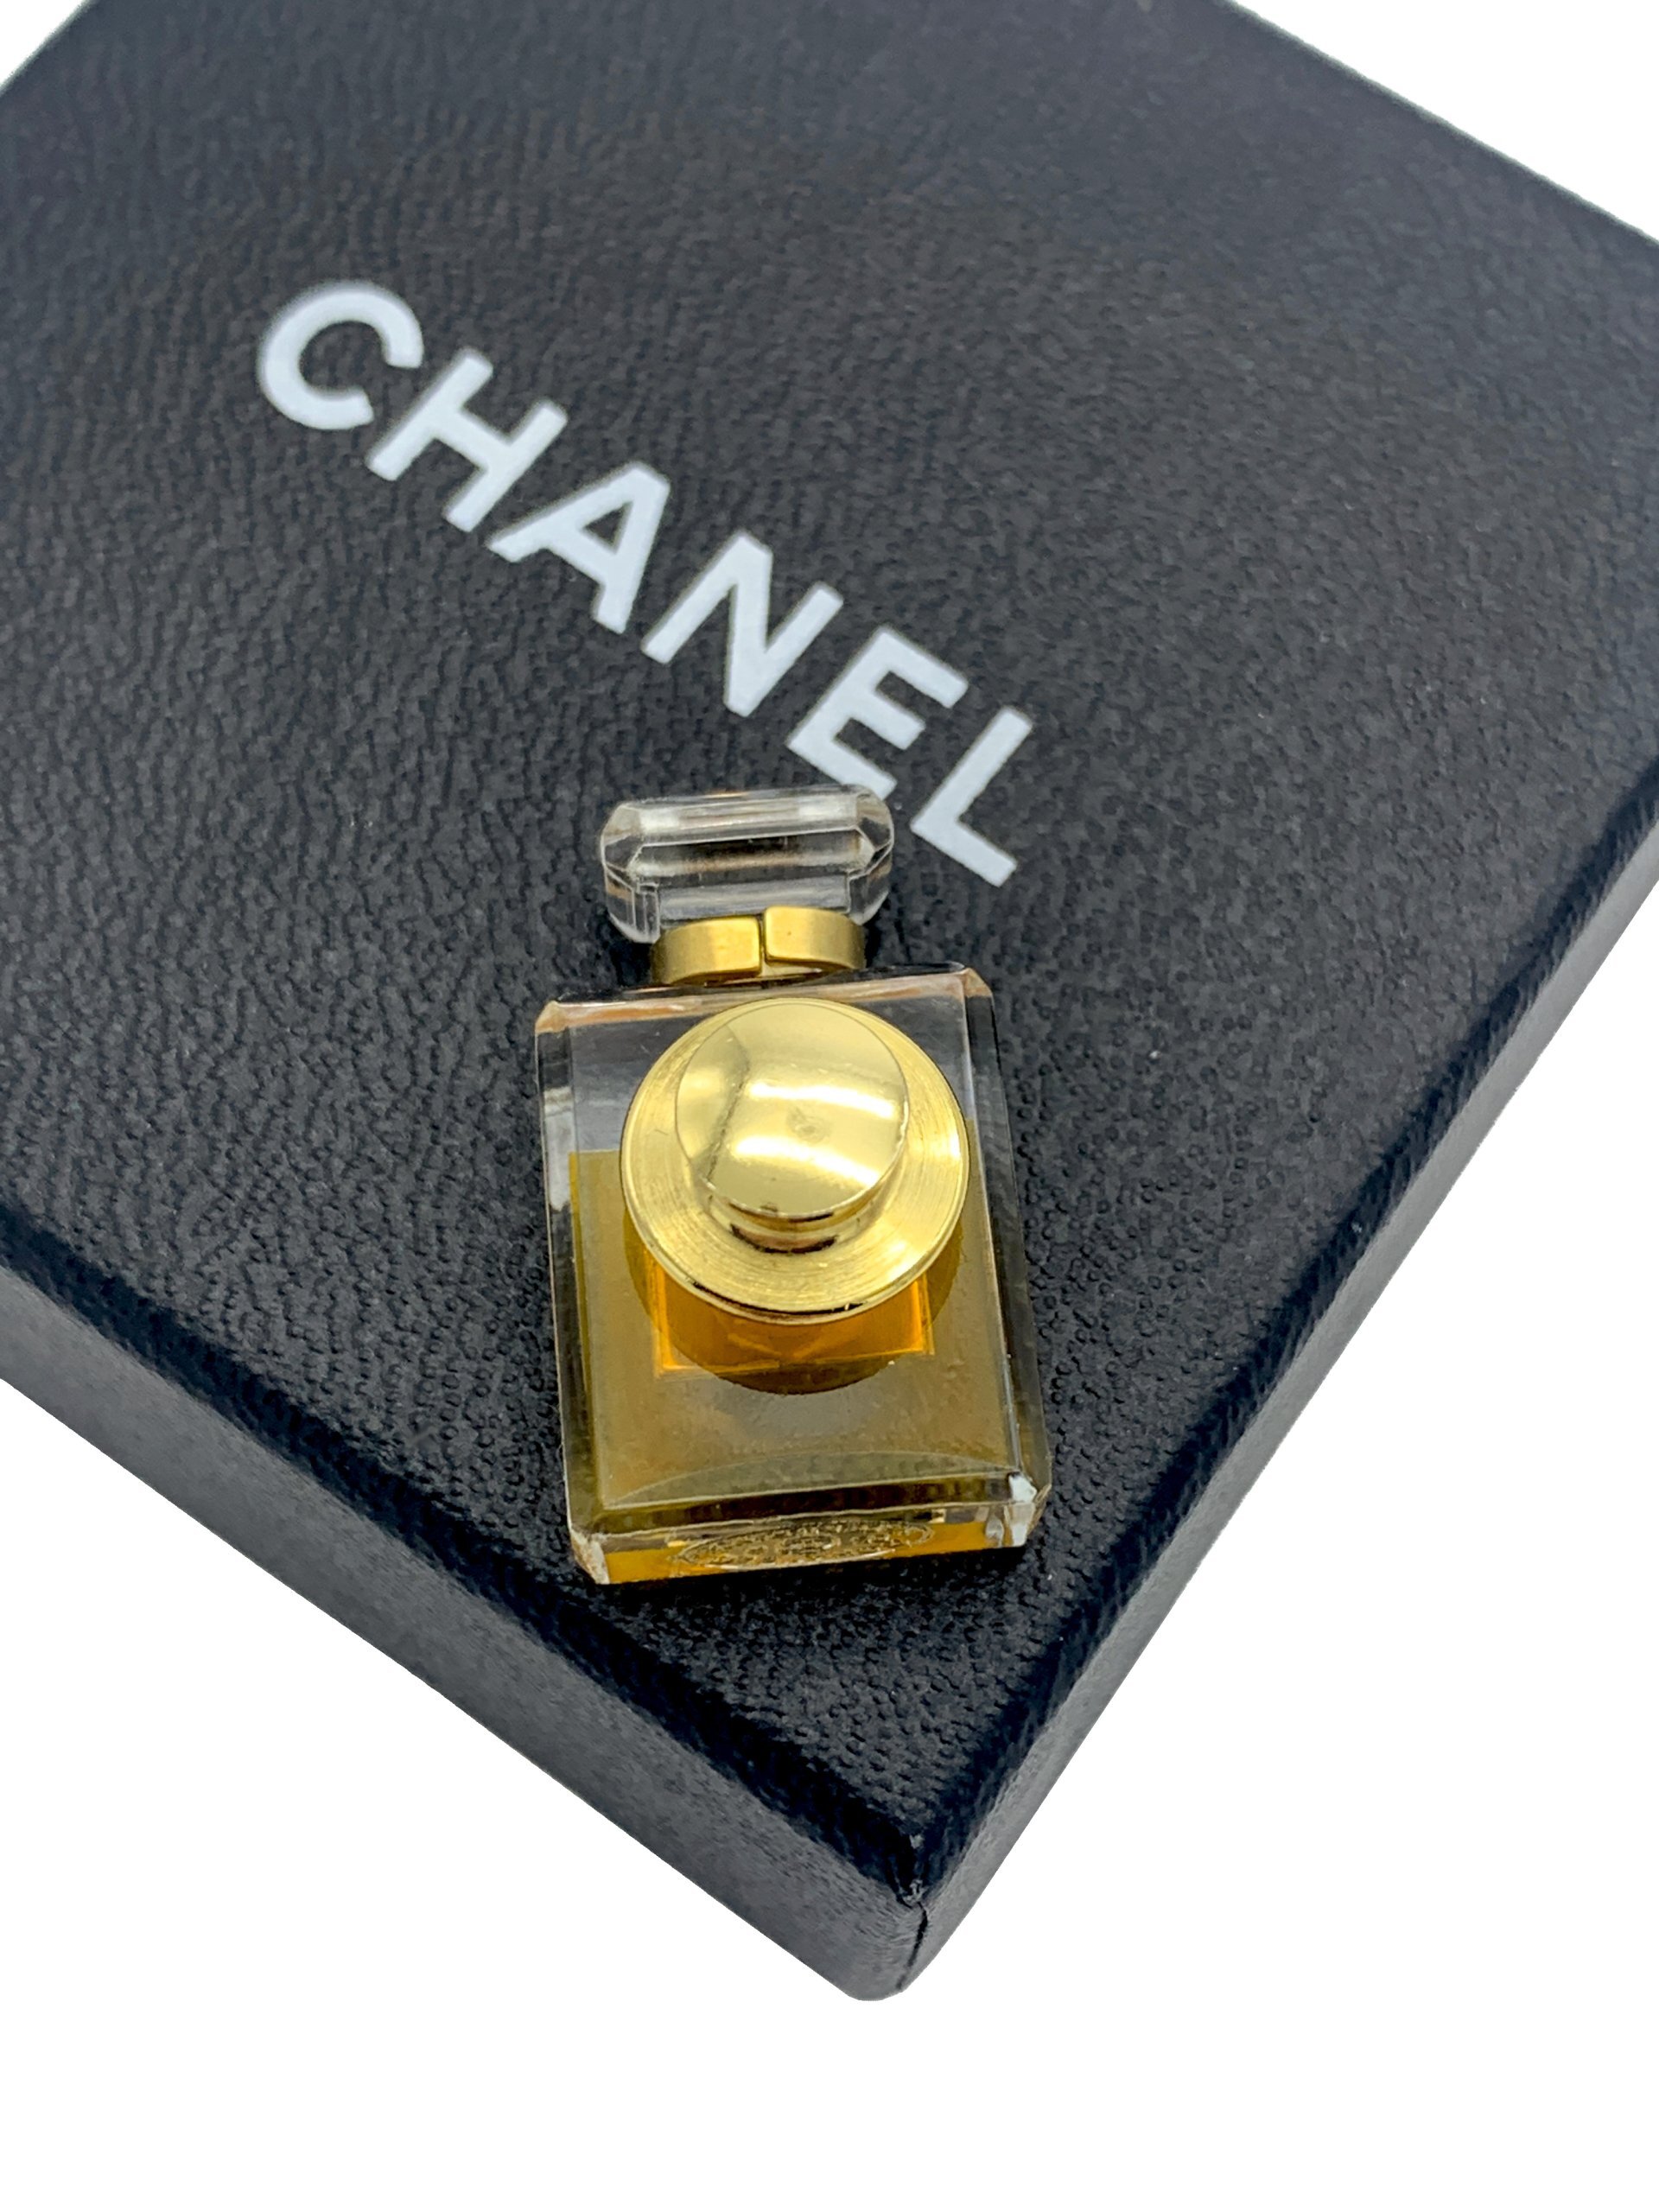 Chanel No 5 Perfume Bottle Brooch